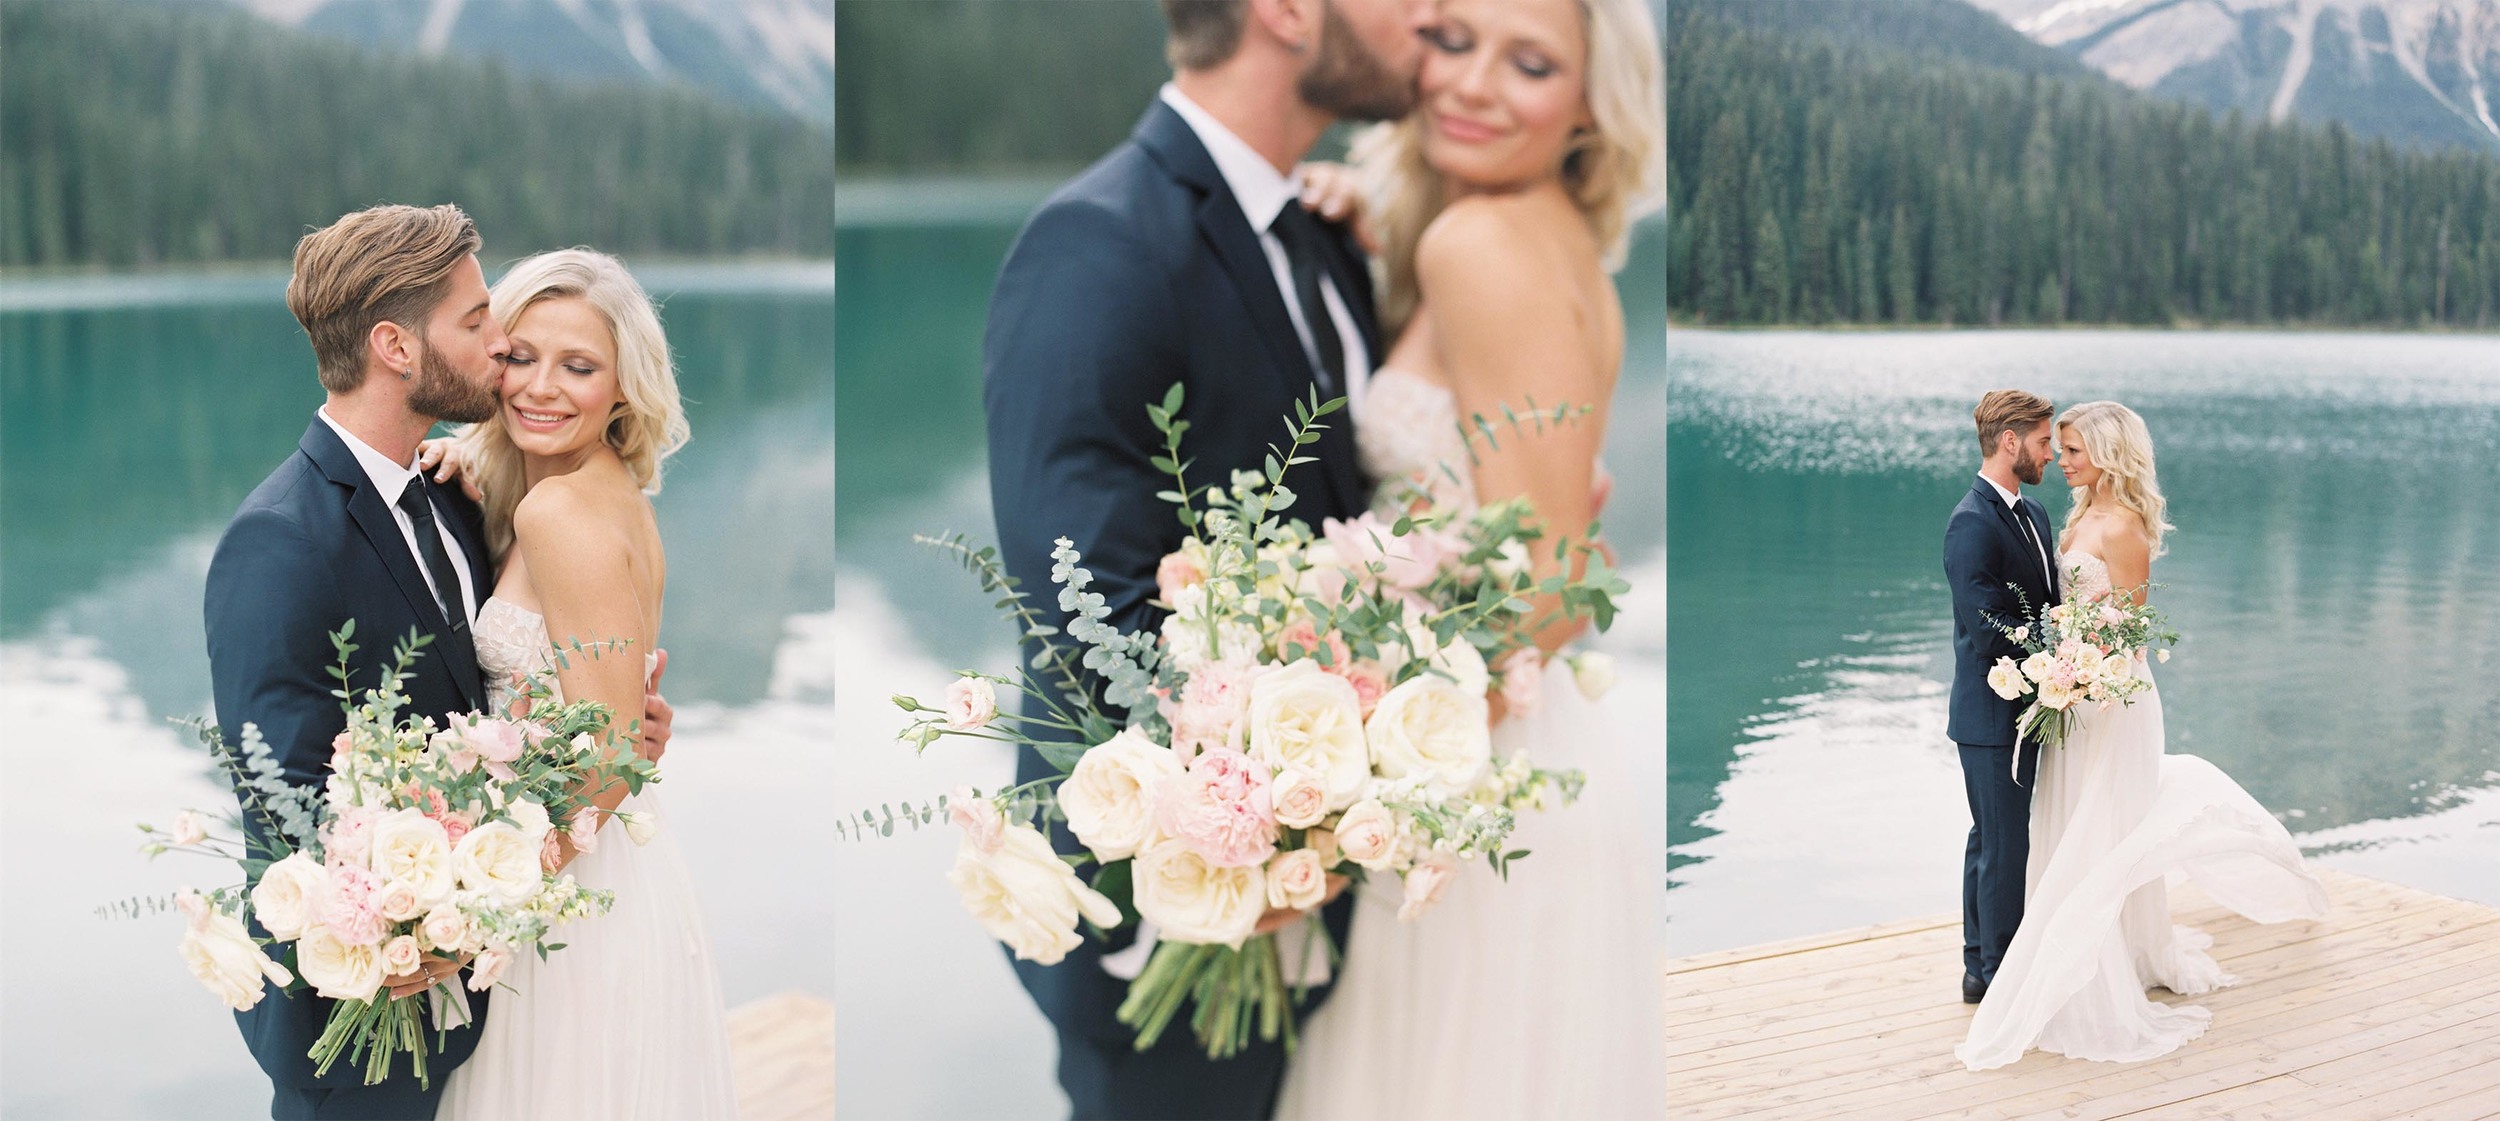 toronto-ontario-high-end-wedding-photographer-richelle-hunter-photography-banff-emerald-lake.jpg